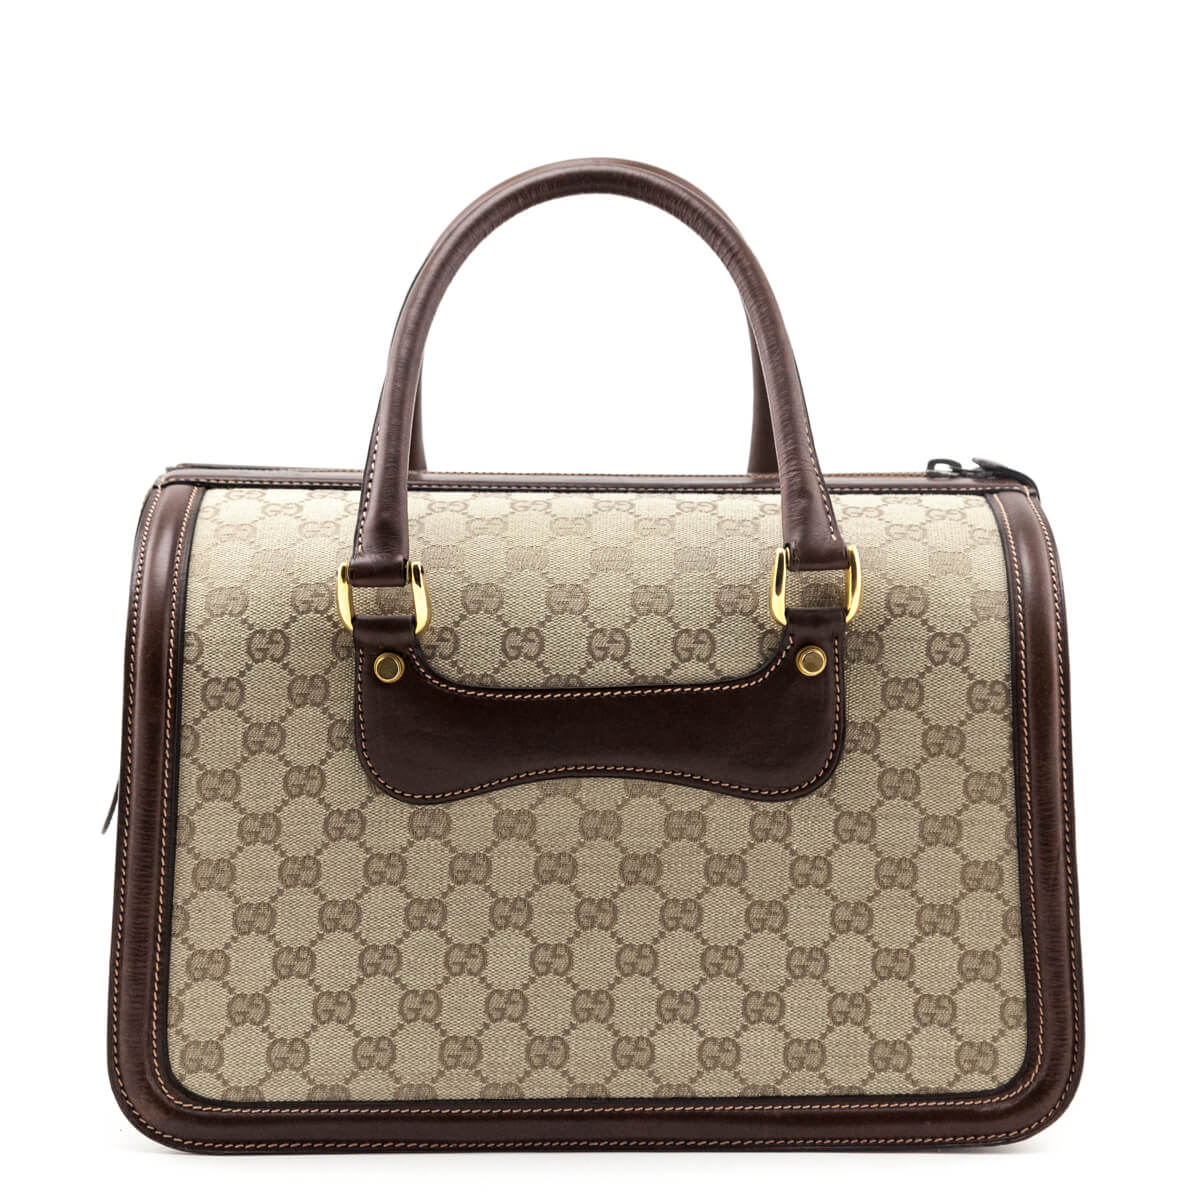 Gucci Beige GG Monogram Vanity Case - Preloved Gucci Handbags